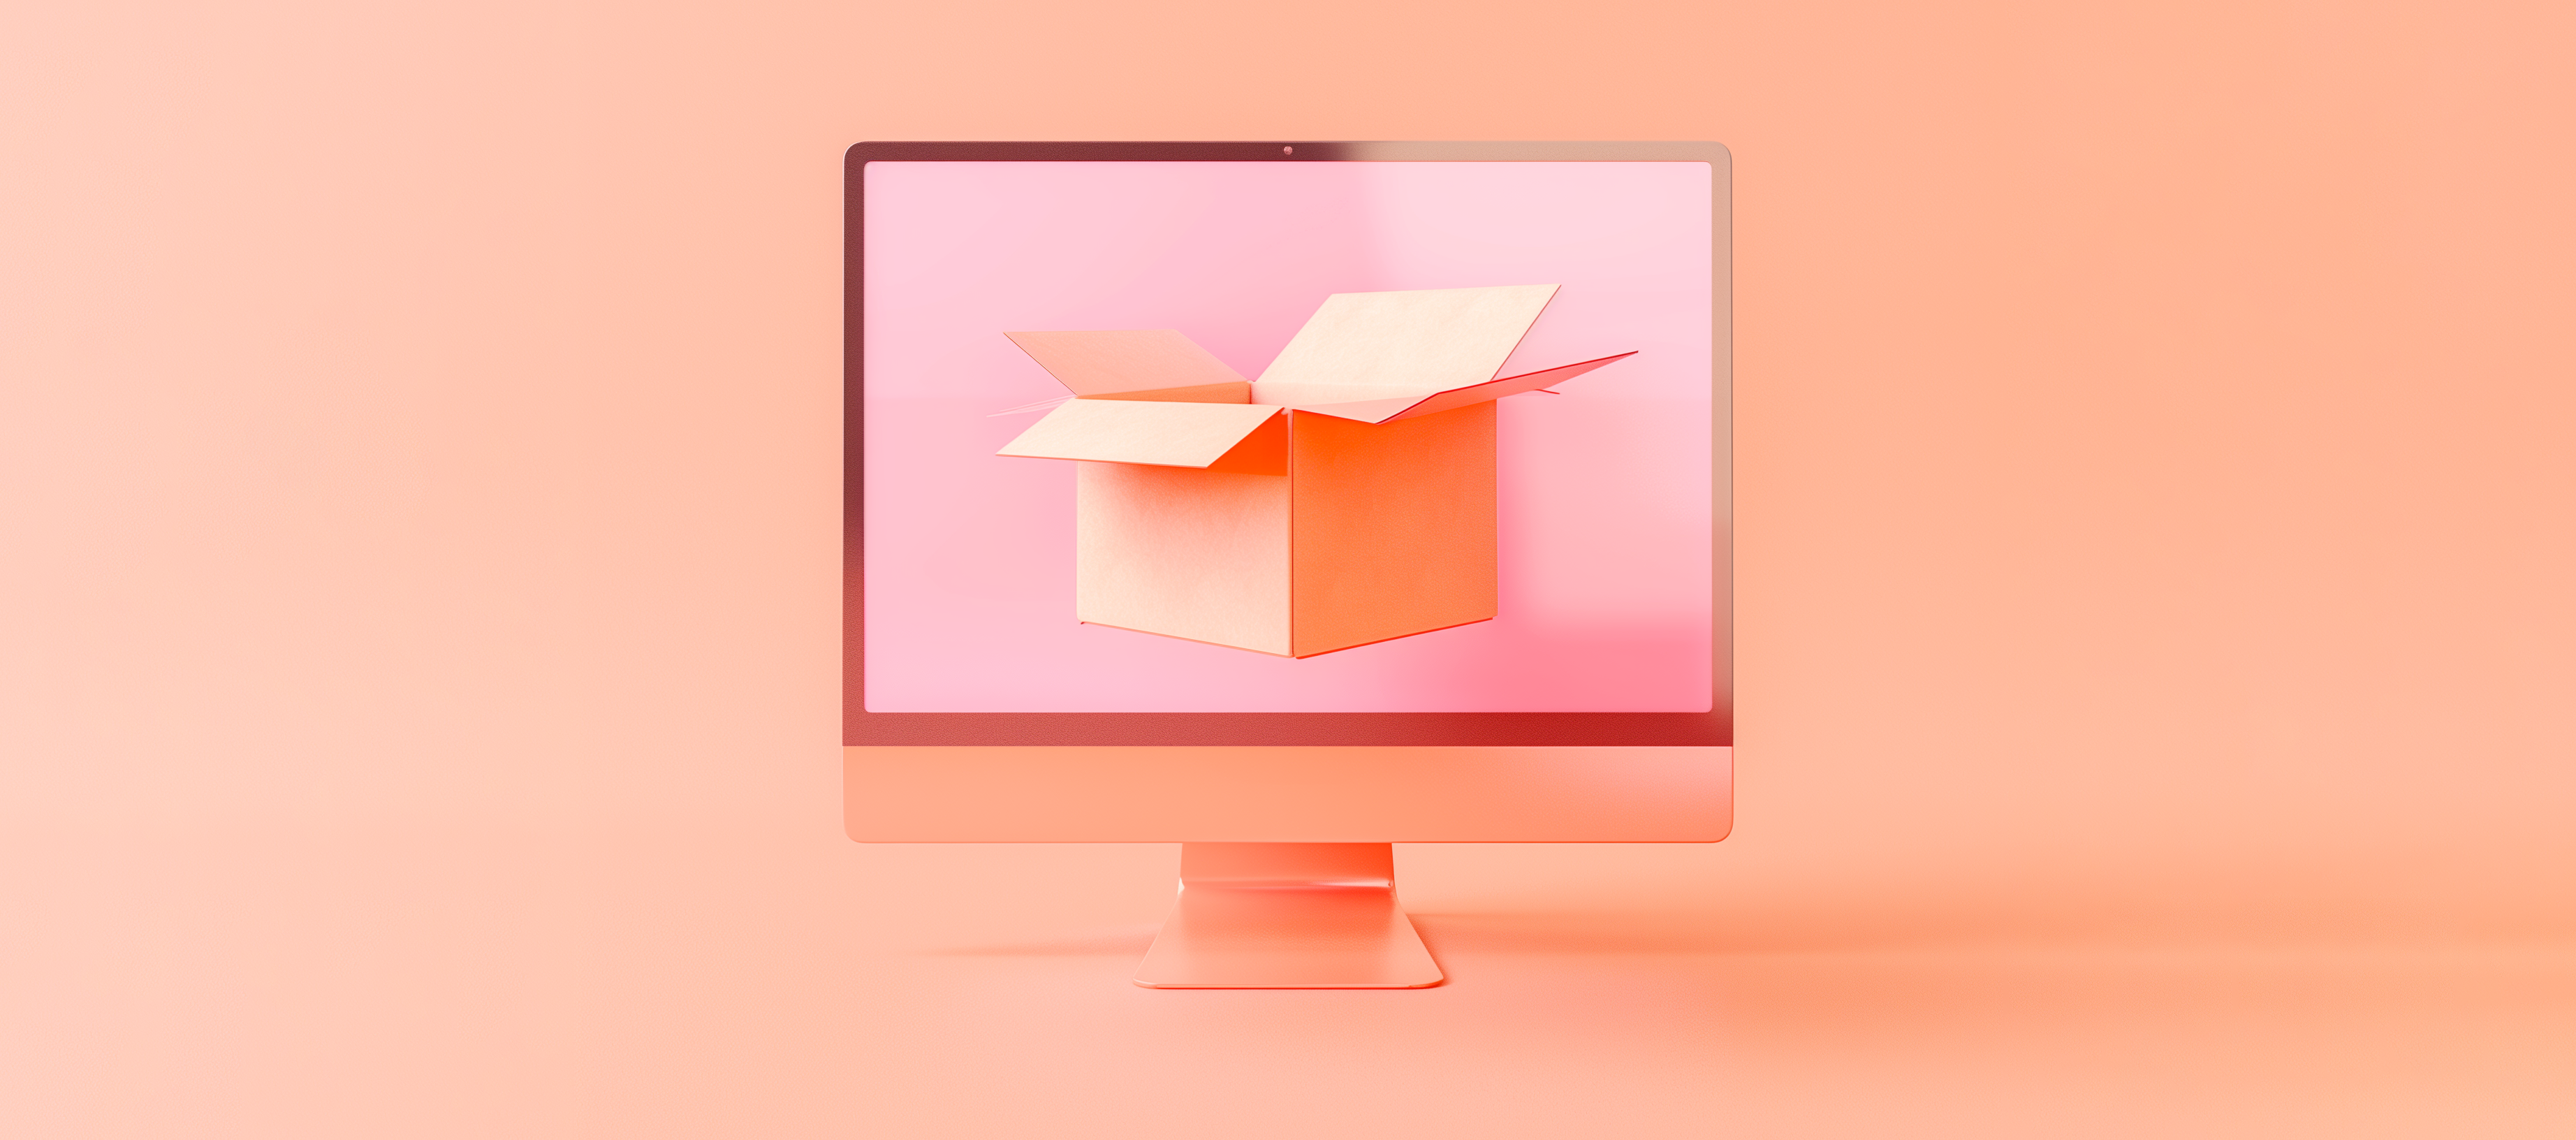 A desktop screen shows an image of a cardboard box, representing dropshipping software